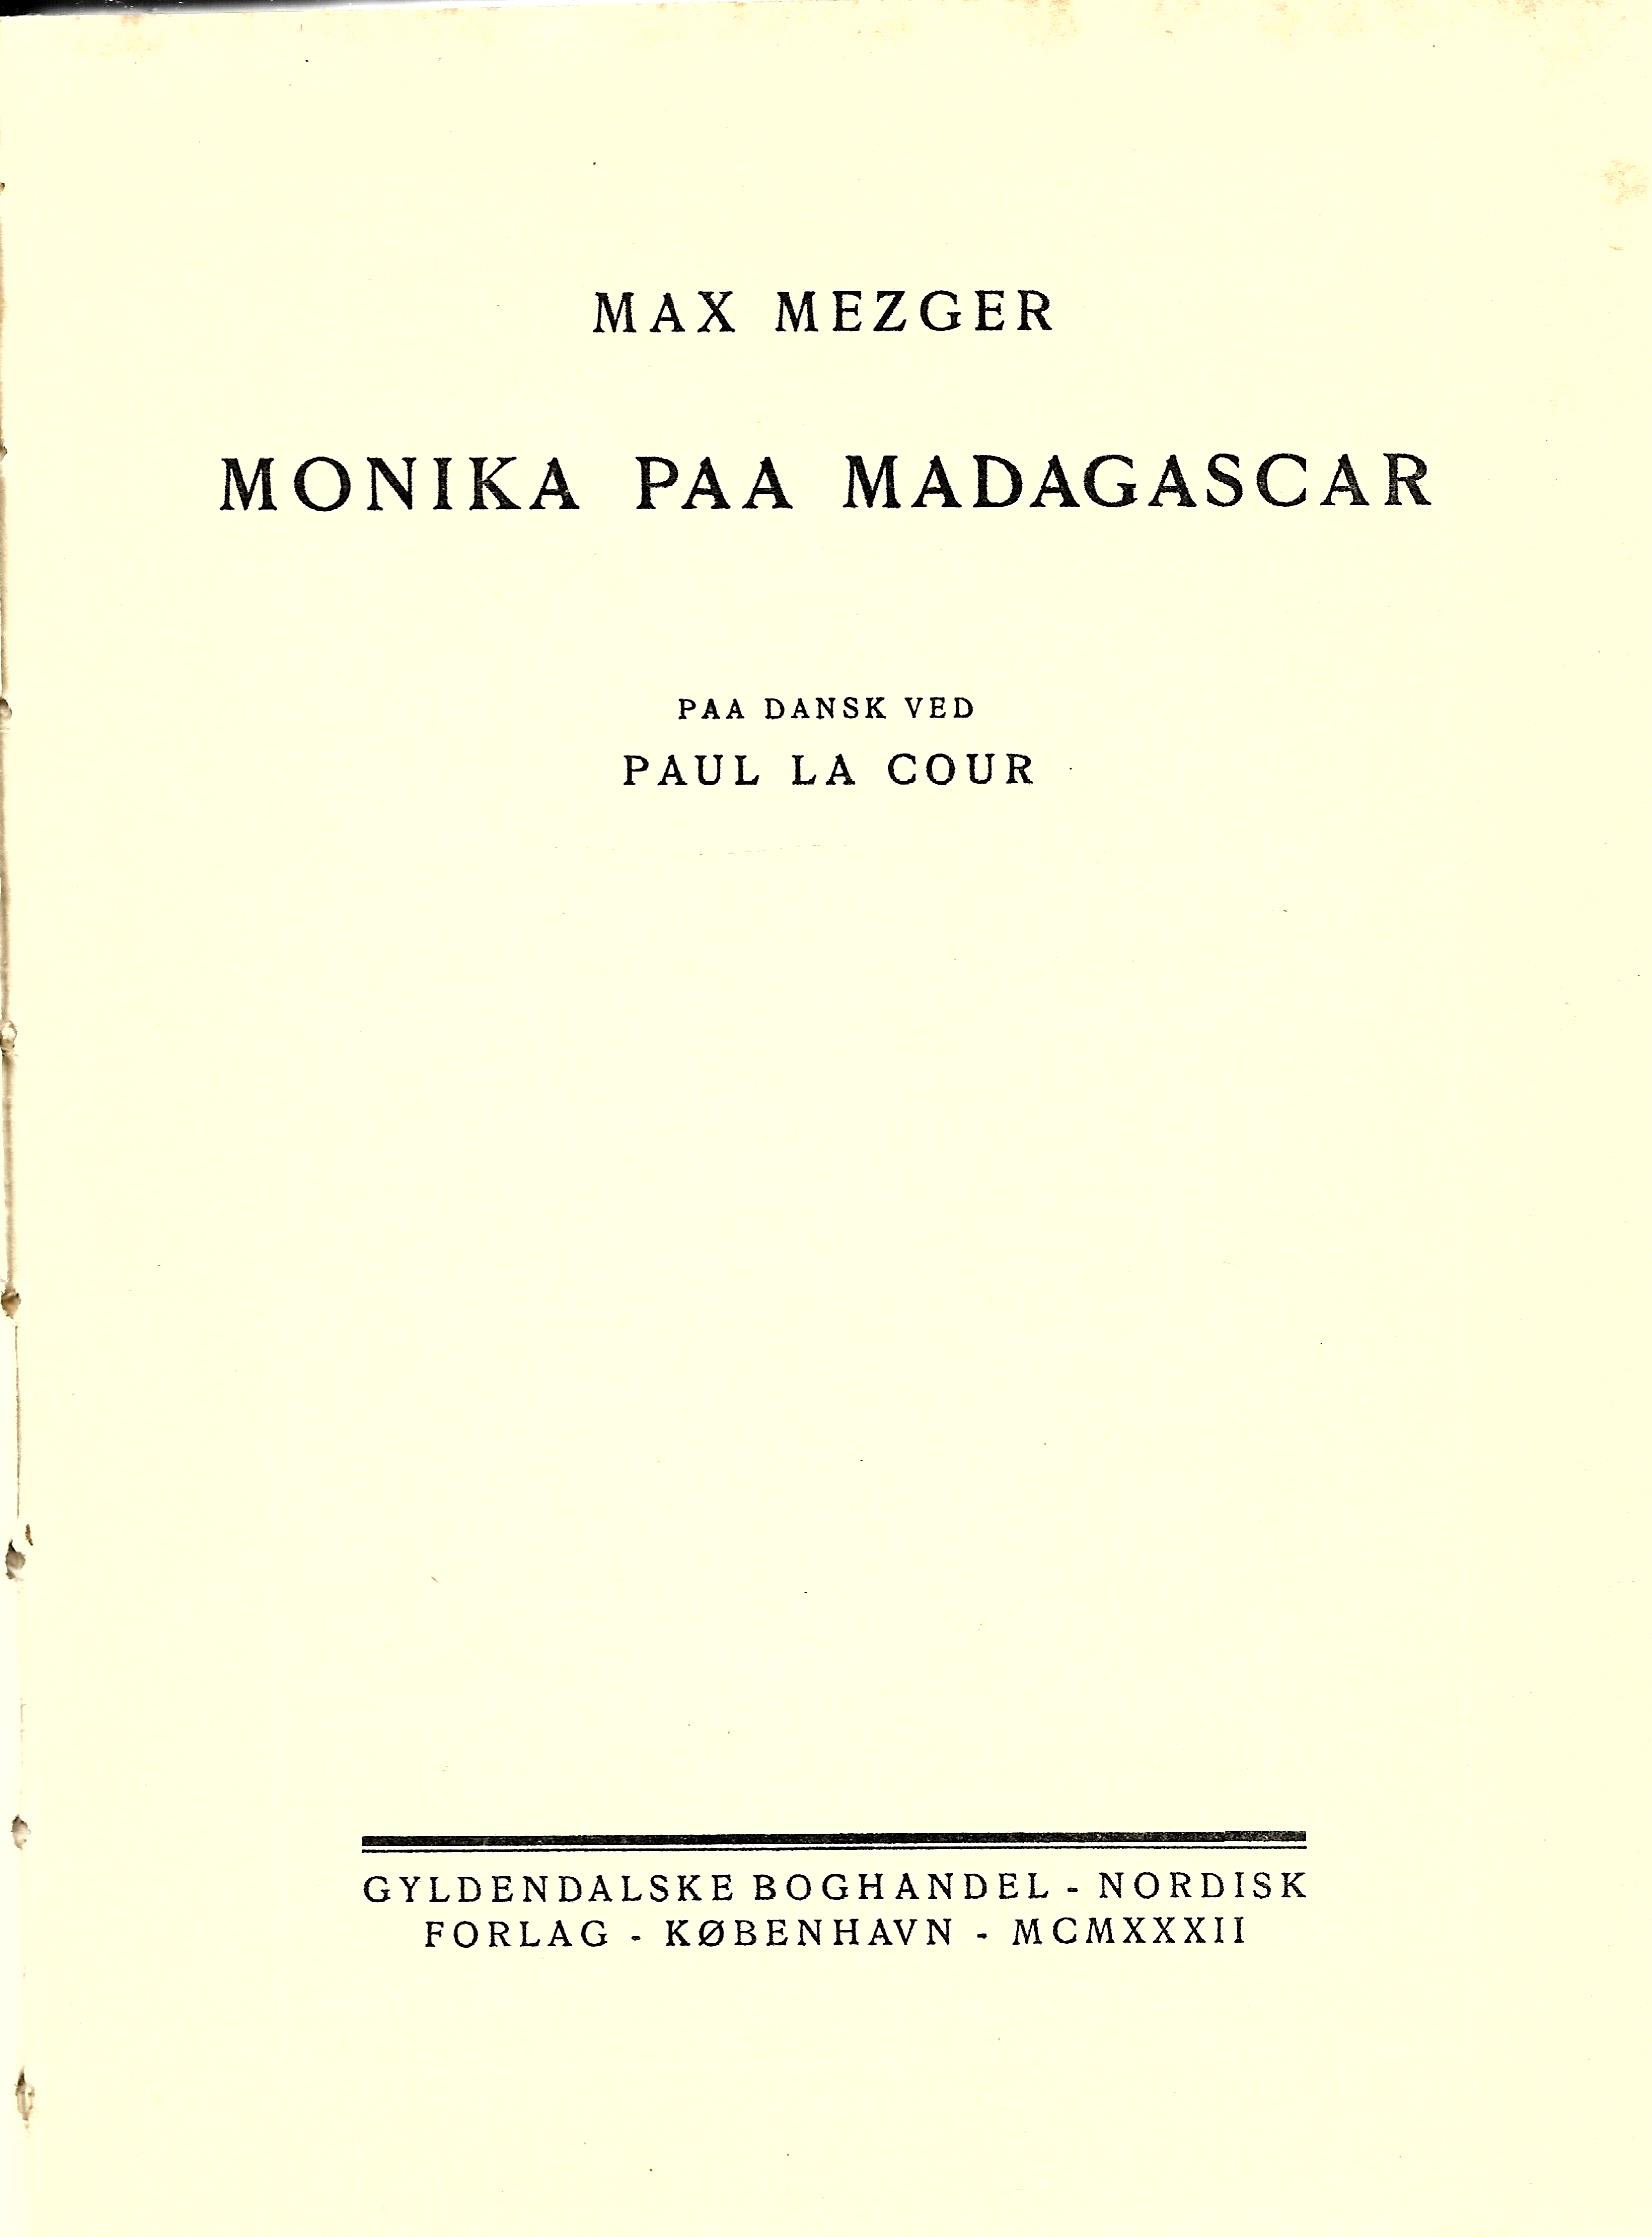 Monika paa Madagascar (Monica fährt nach Madagaskar) - Max Mezger 1932